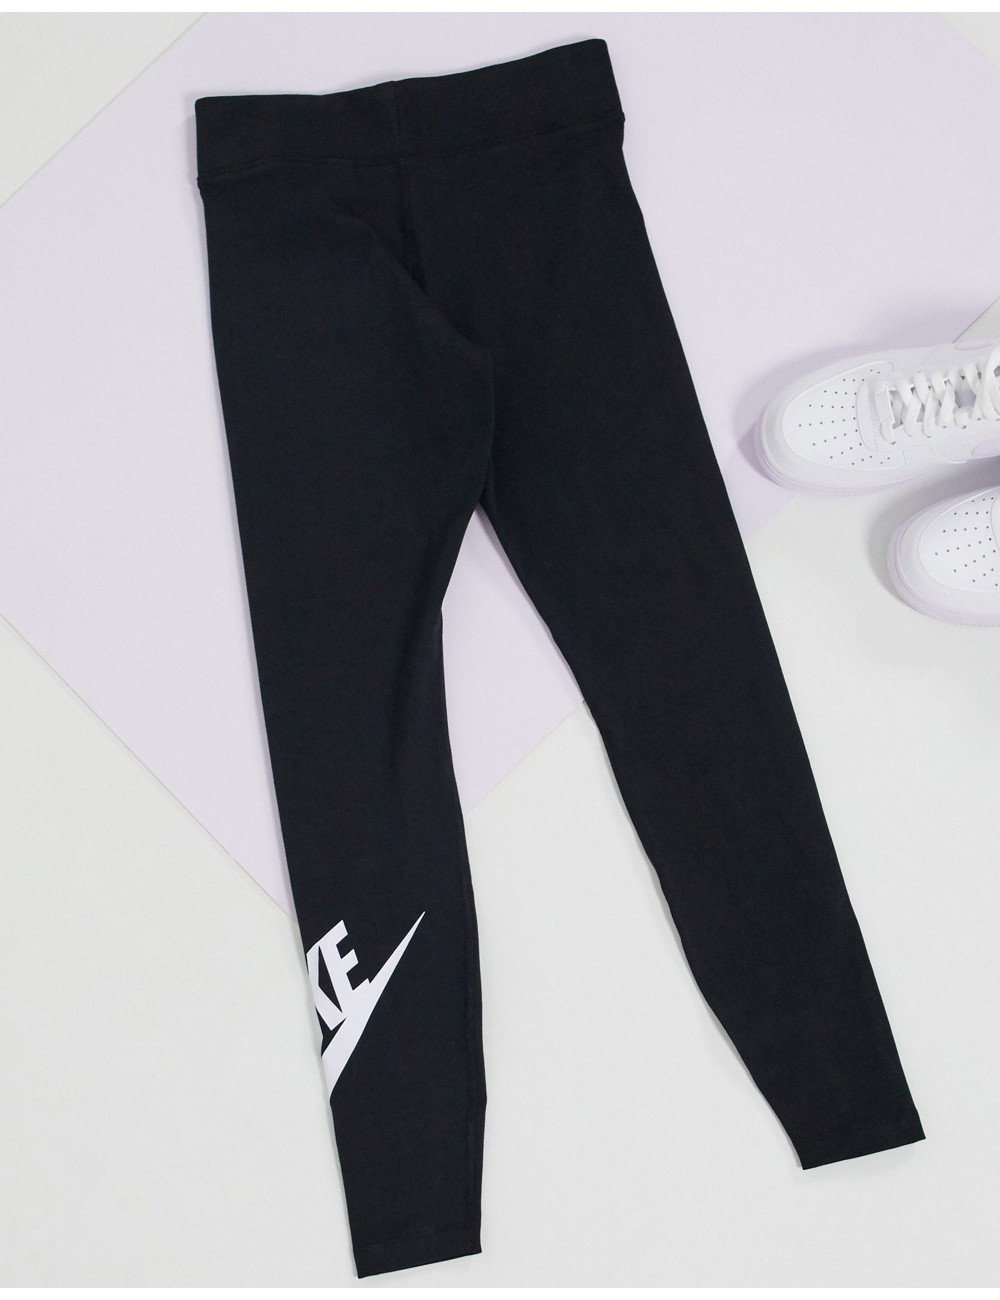 Nike high-waisted legging...